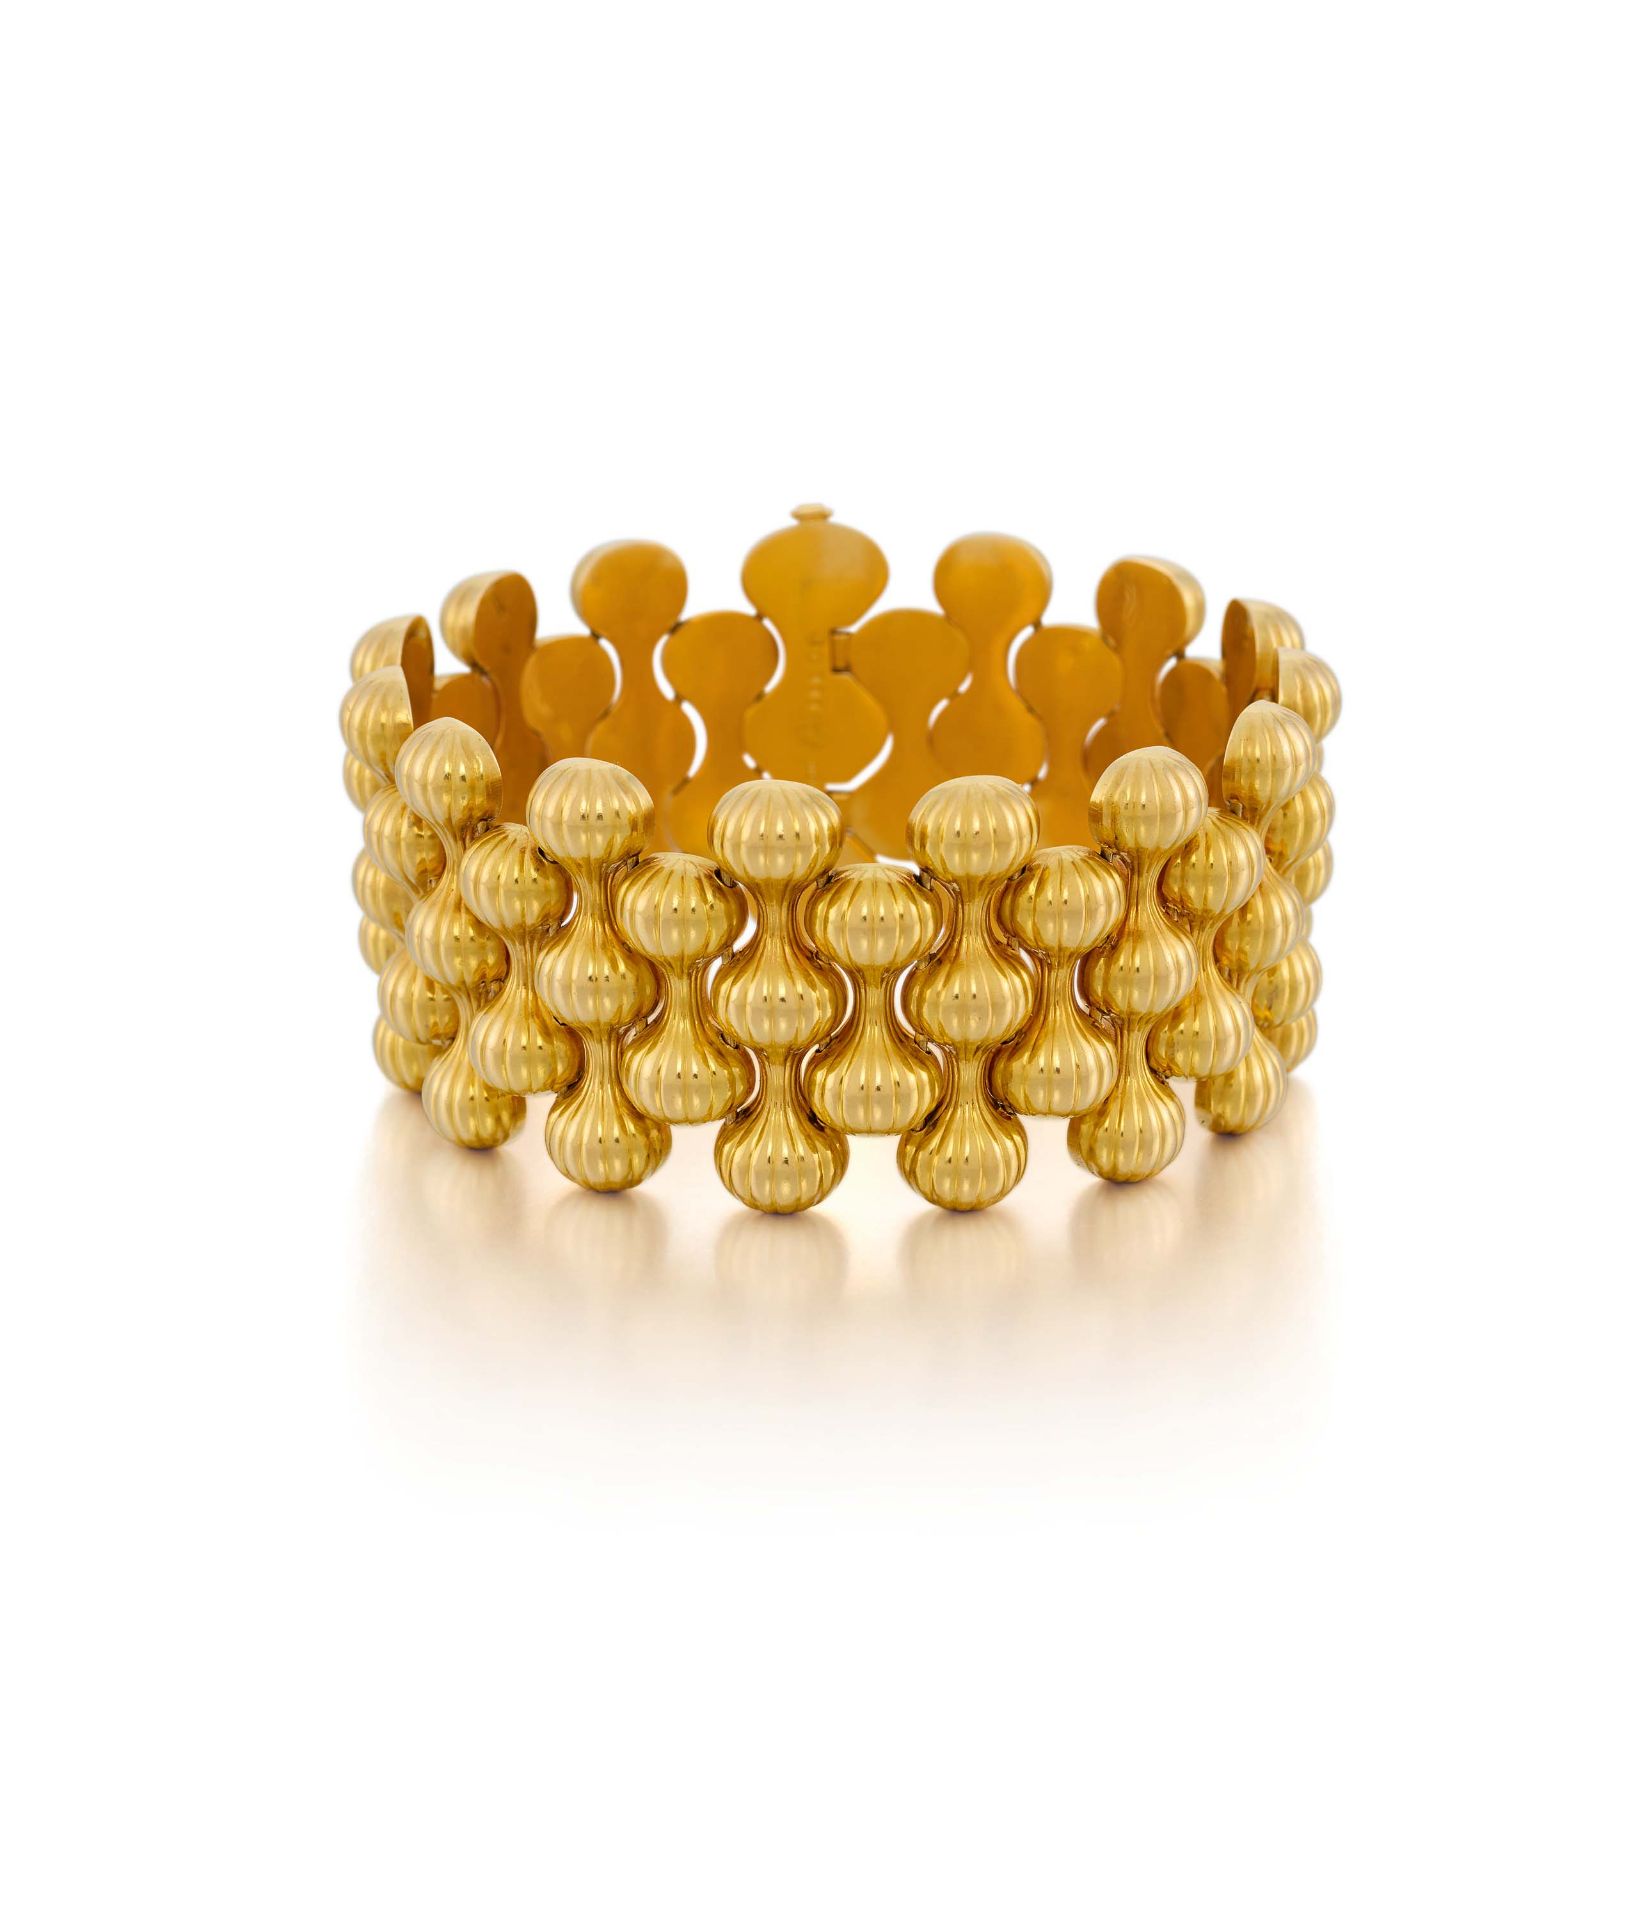 Georg Jensen: Gold-Armband